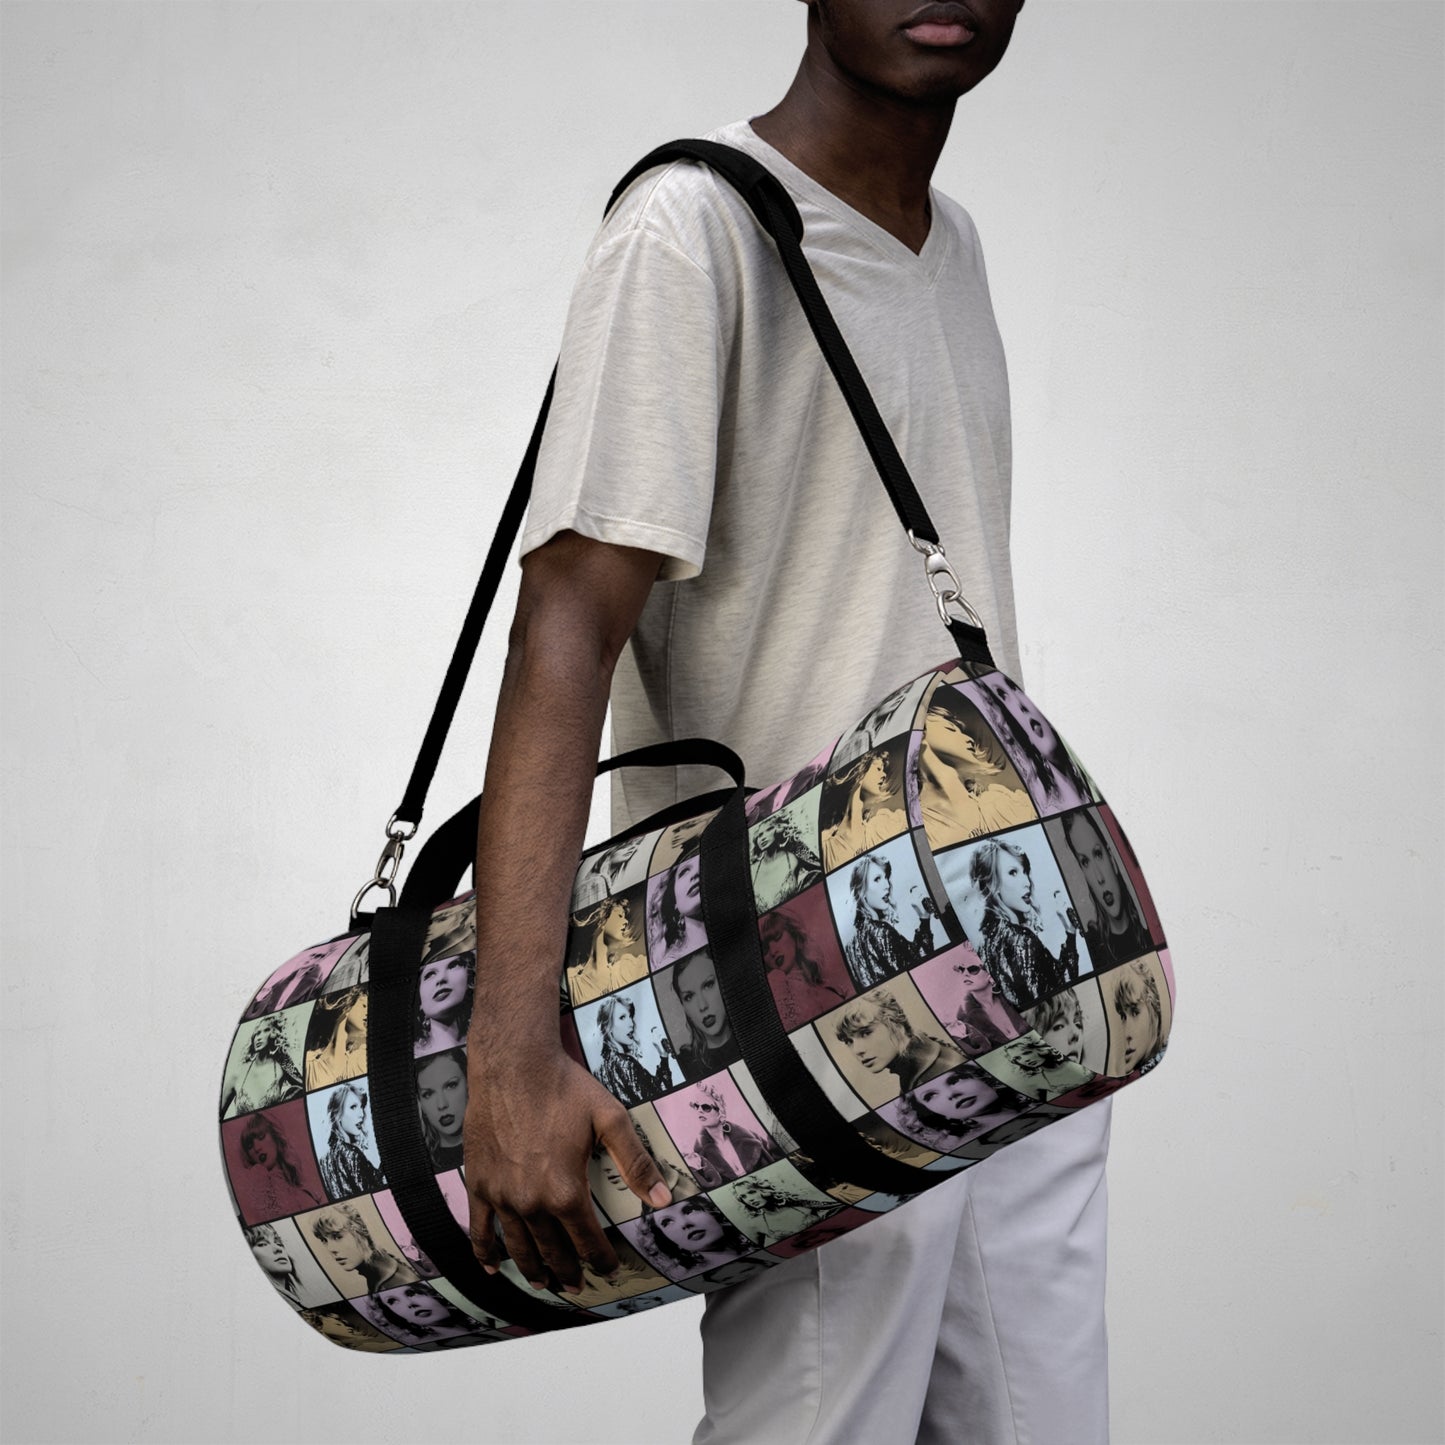 Taylor Swift Eras Collage Duffel Bag